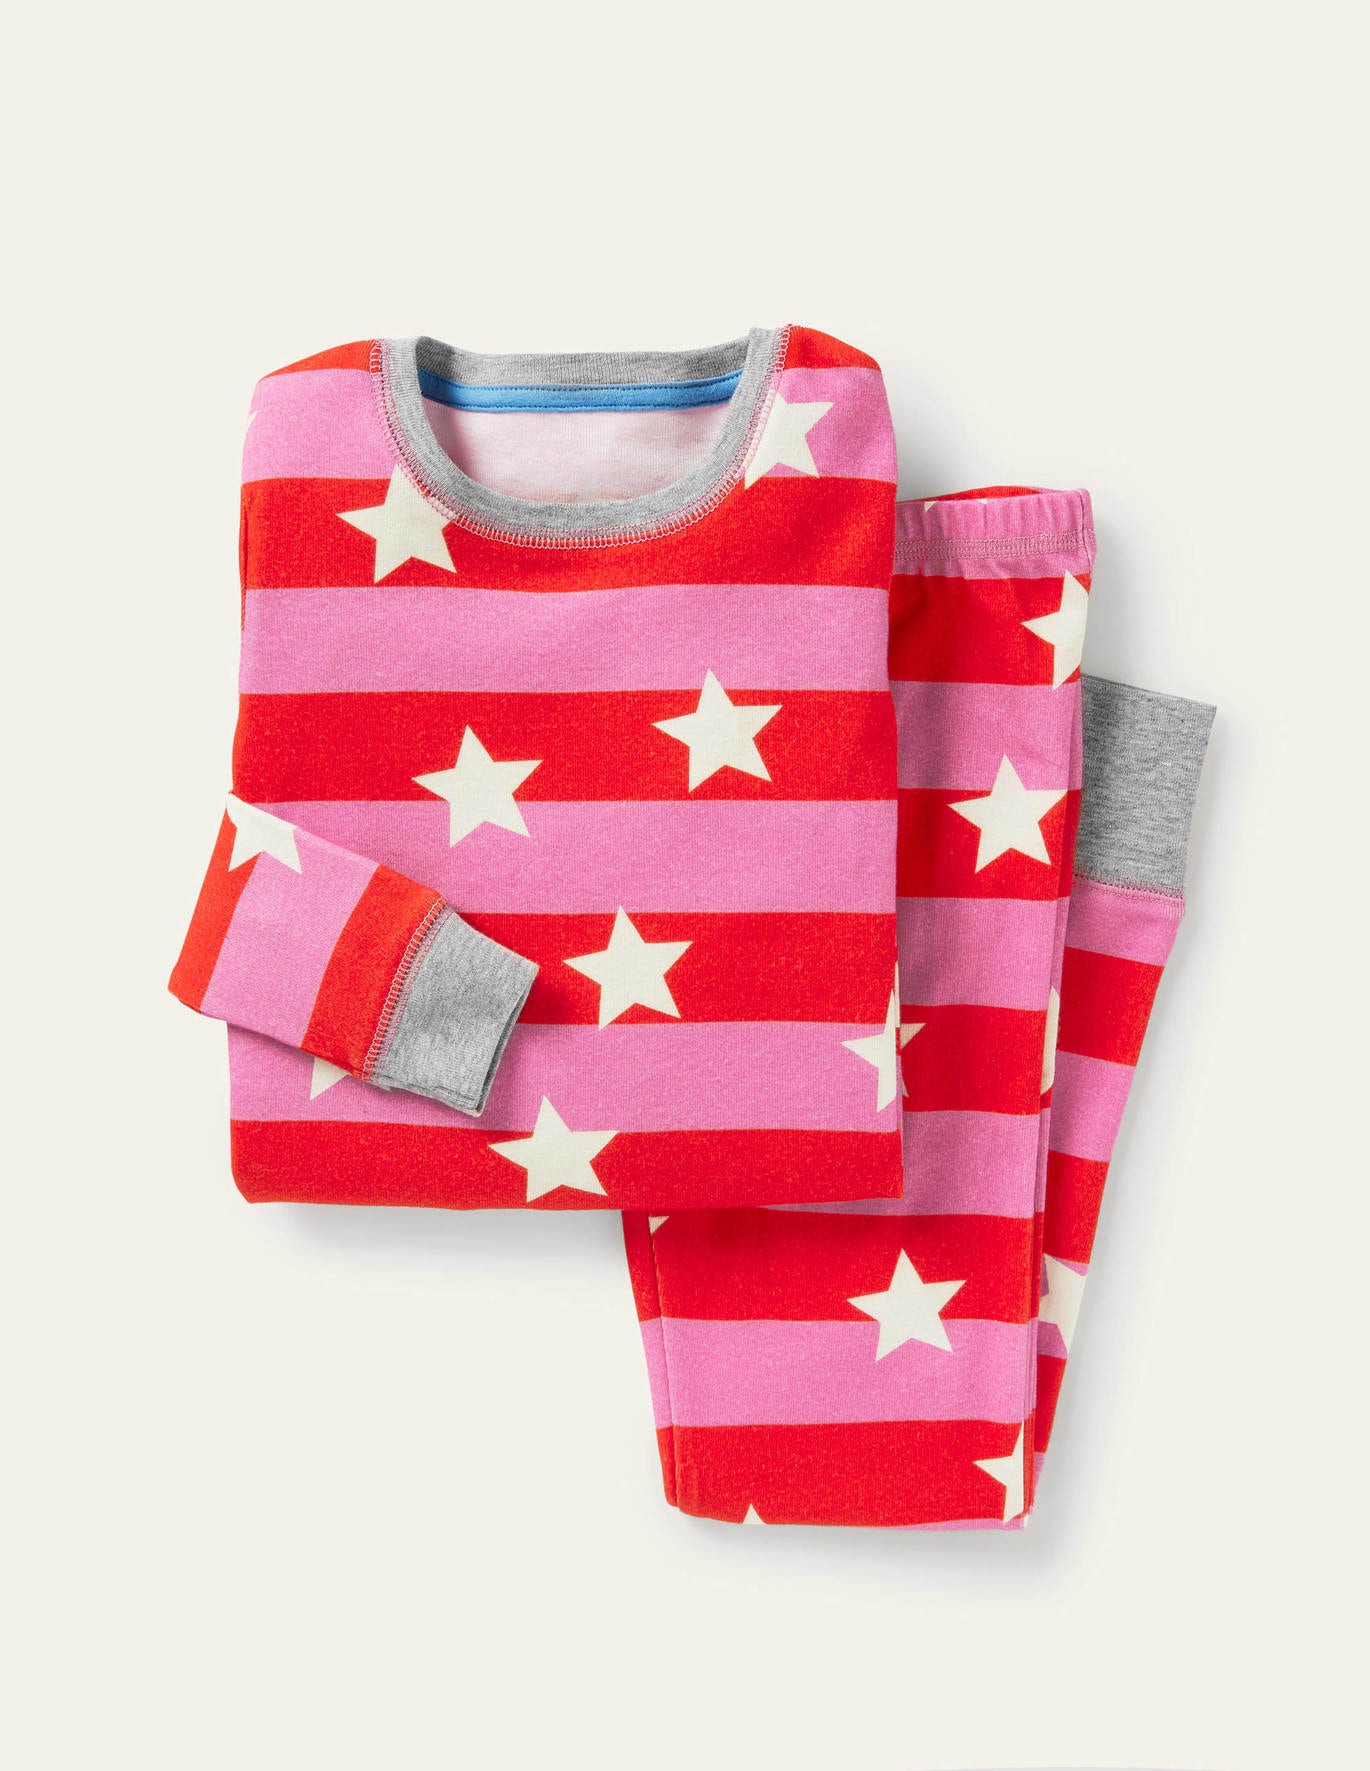 Boden Snug Glow-In-The-Dark Pajamas - Bright Petal Pink Star